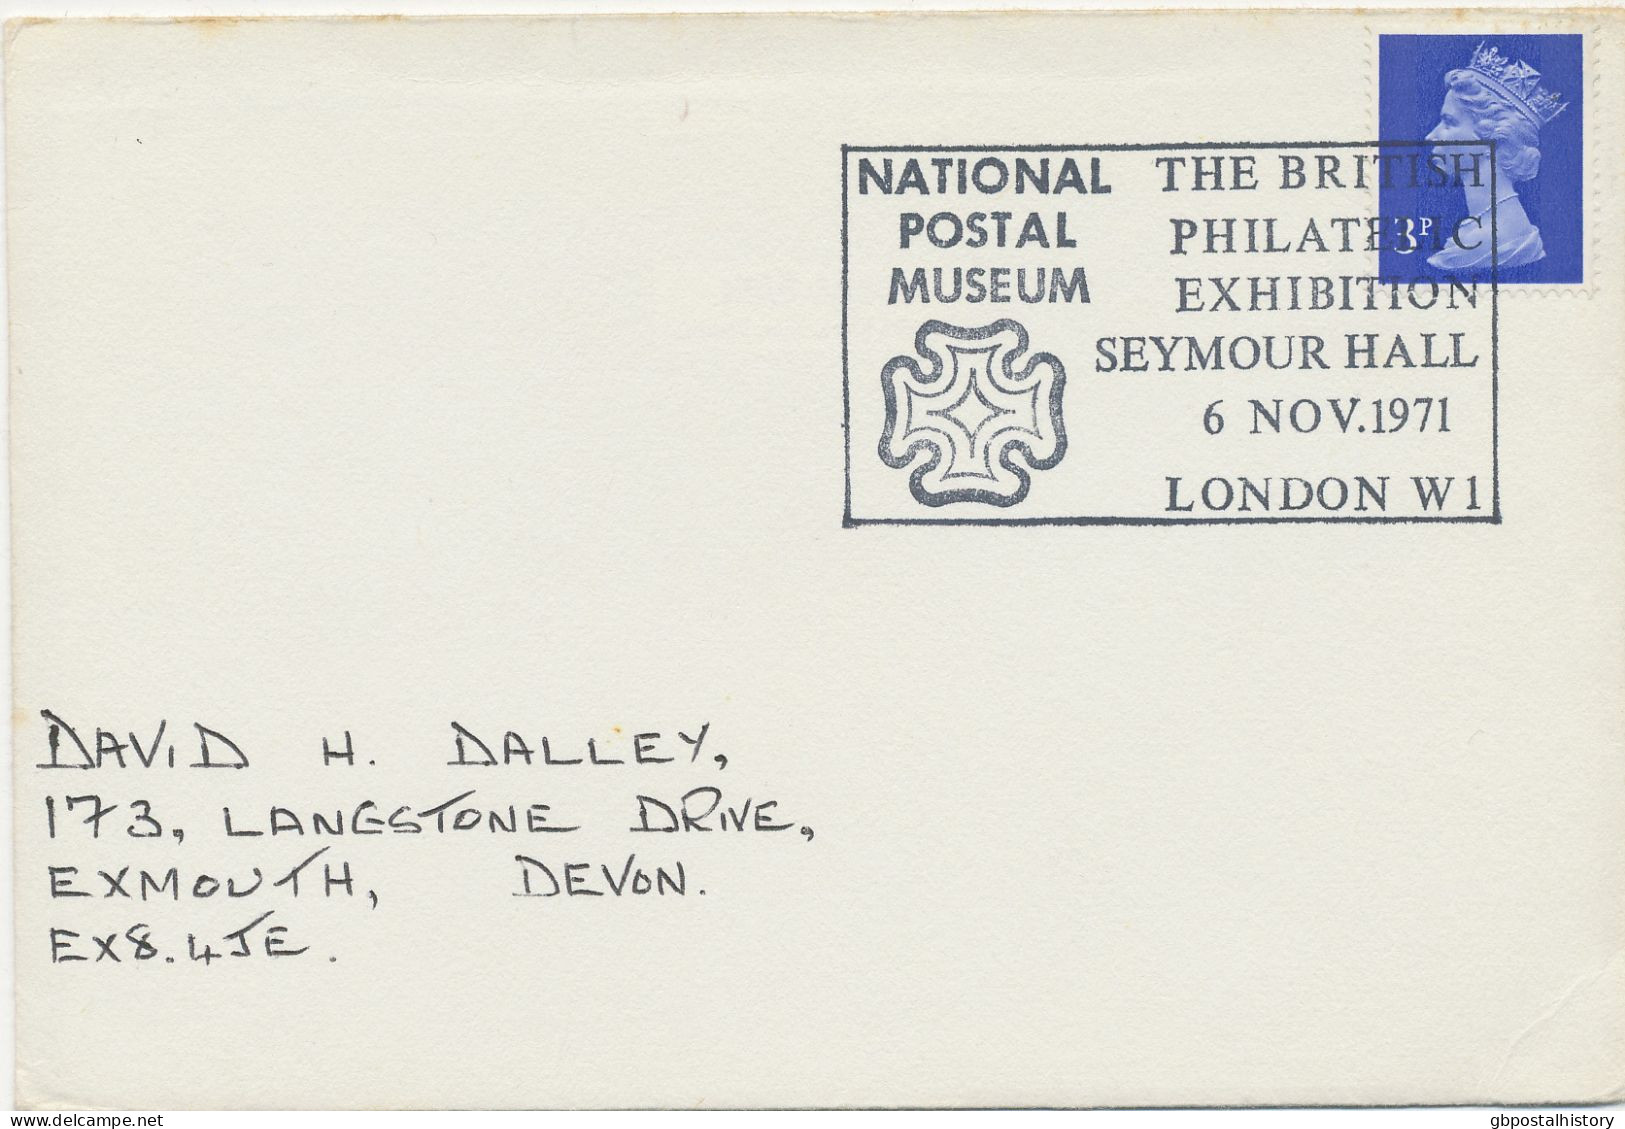 GB SPECIAL EVENT POSTMARKS 1971 THE BRITISH PHILATELIC EXHIBITION SEYMOUR HALL LONDON W.I. - NATIONAL POSTAL MUSEUM - Briefe U. Dokumente